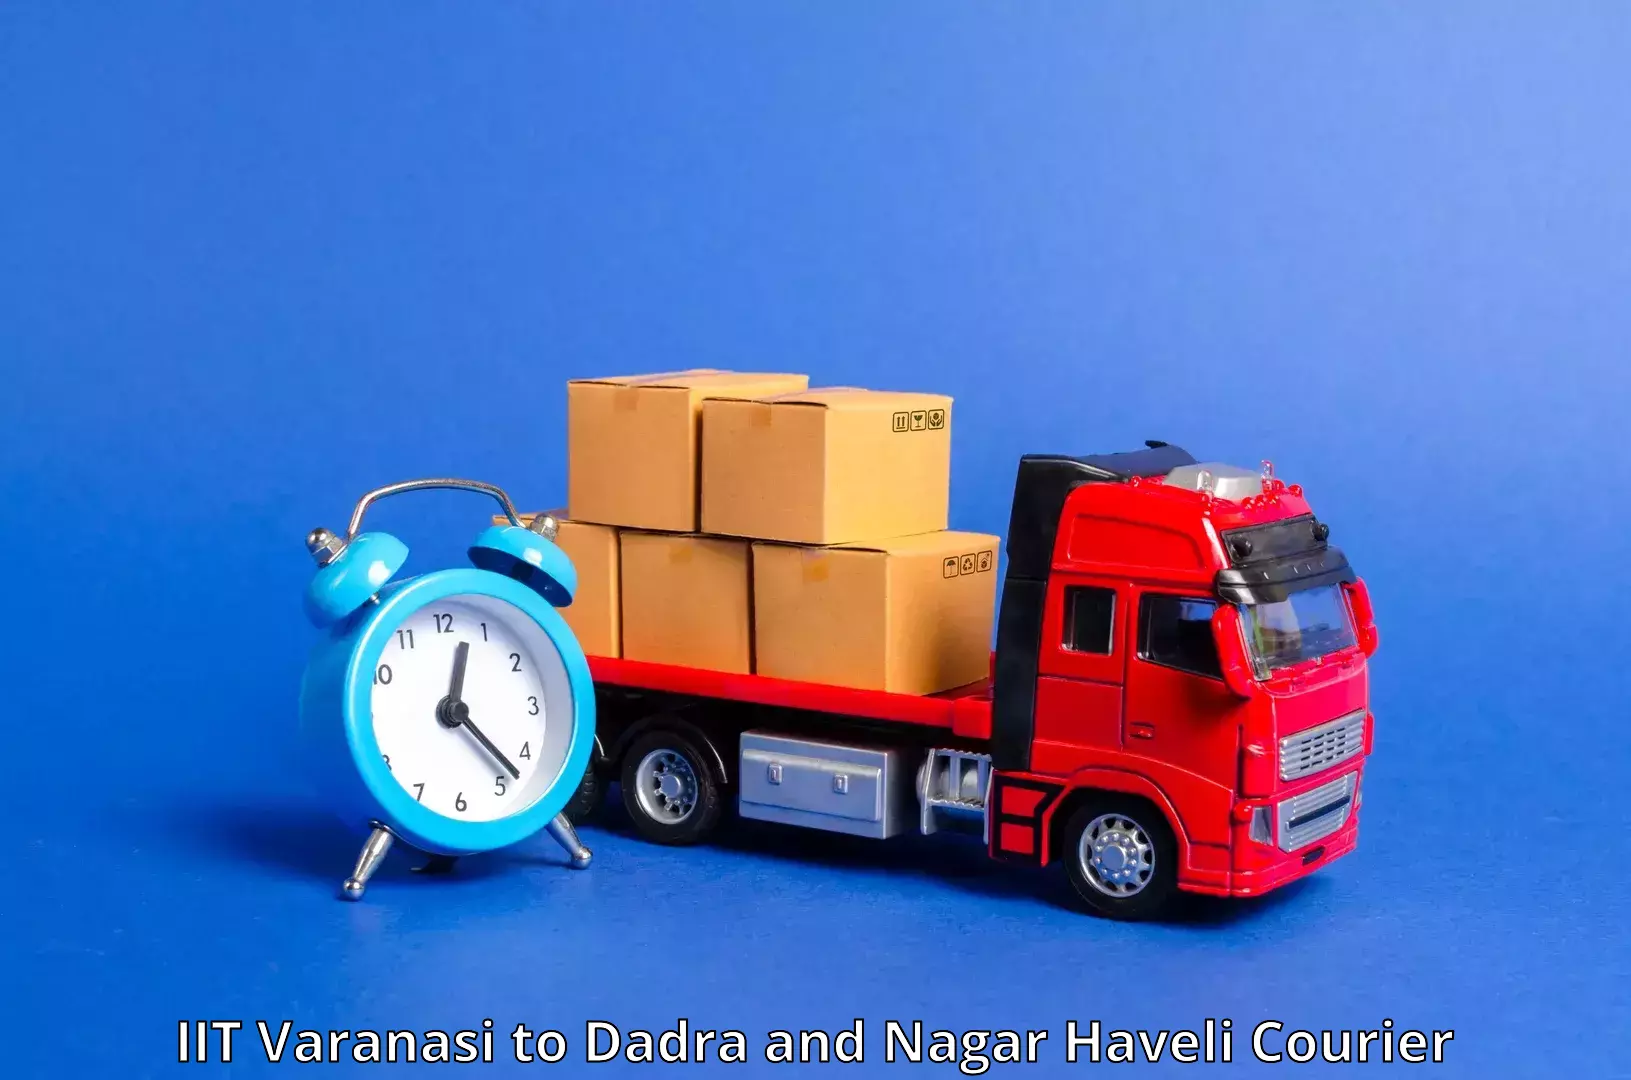 Global logistics network IIT Varanasi to Dadra and Nagar Haveli